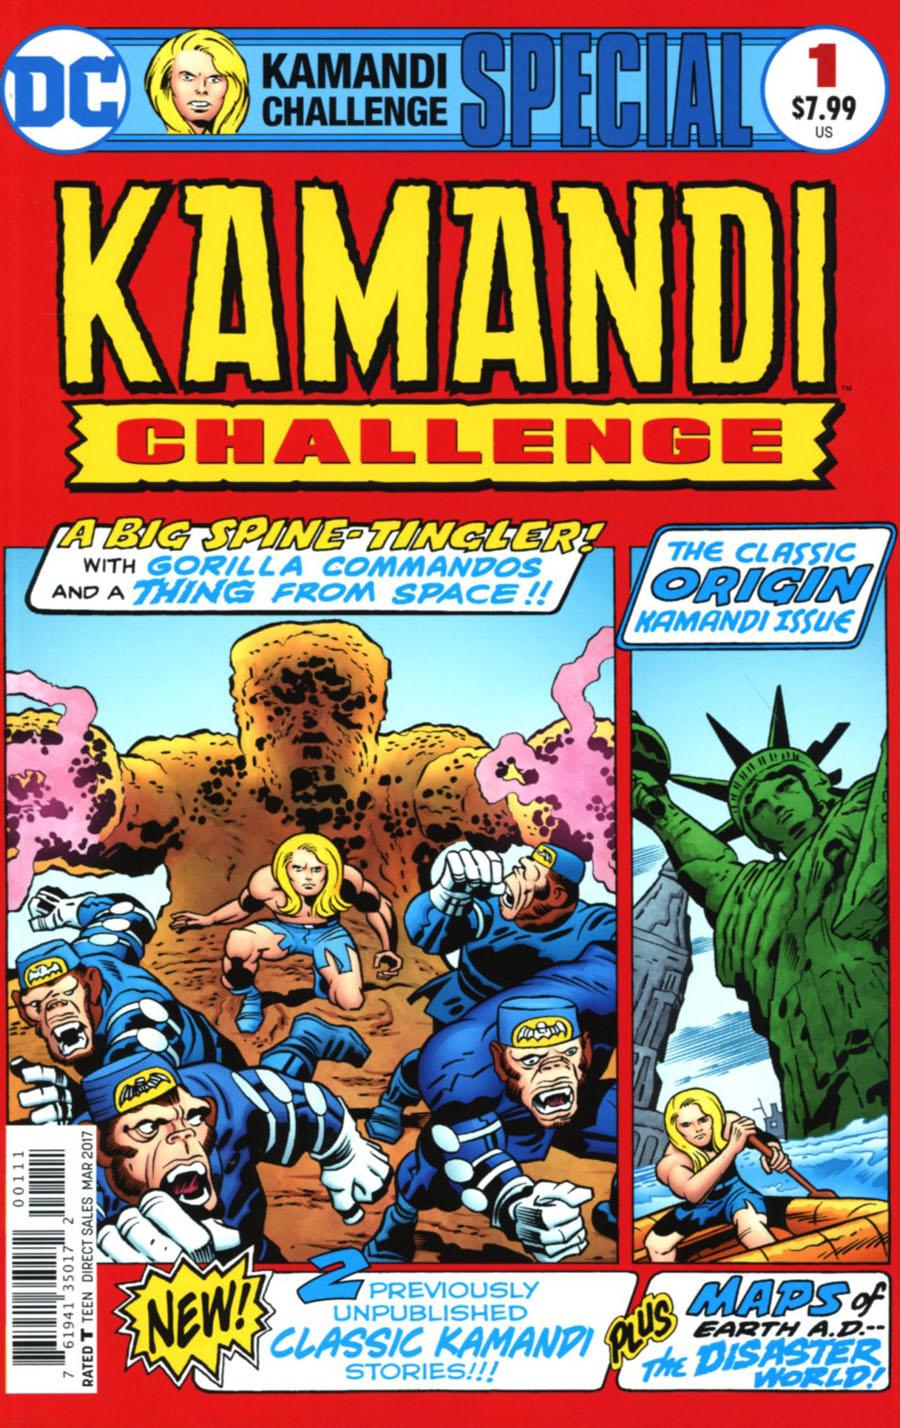 Kamandi Challenge Special Vol. 1 #1